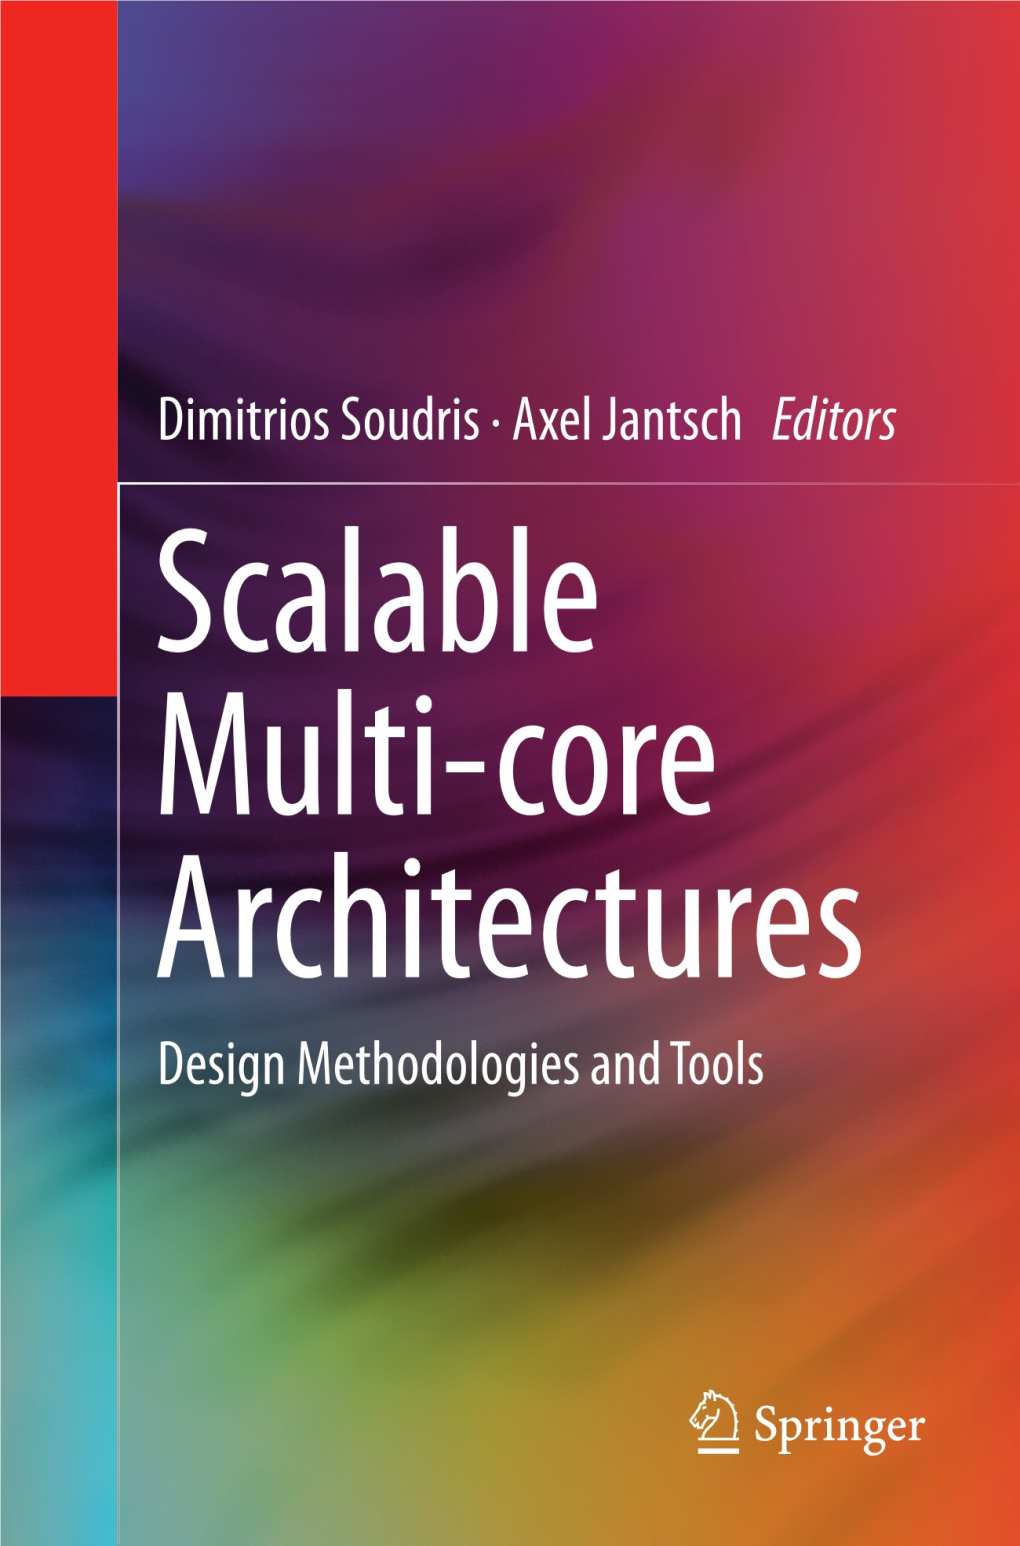 Scalable Multi-Core Architectures